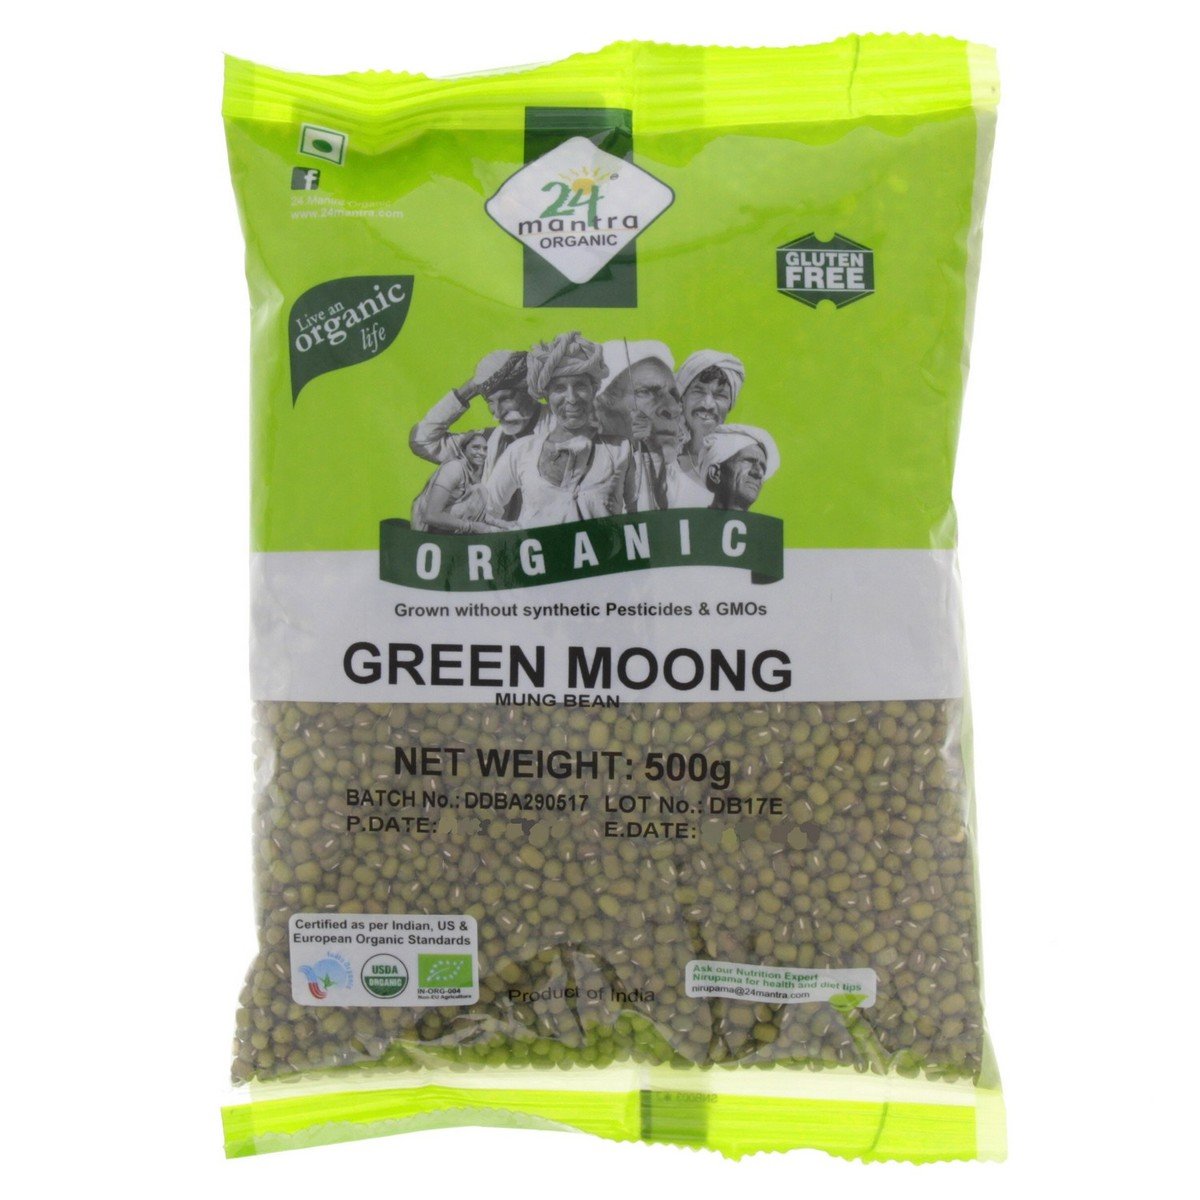 24 Mantra Organic Green Moong 500g